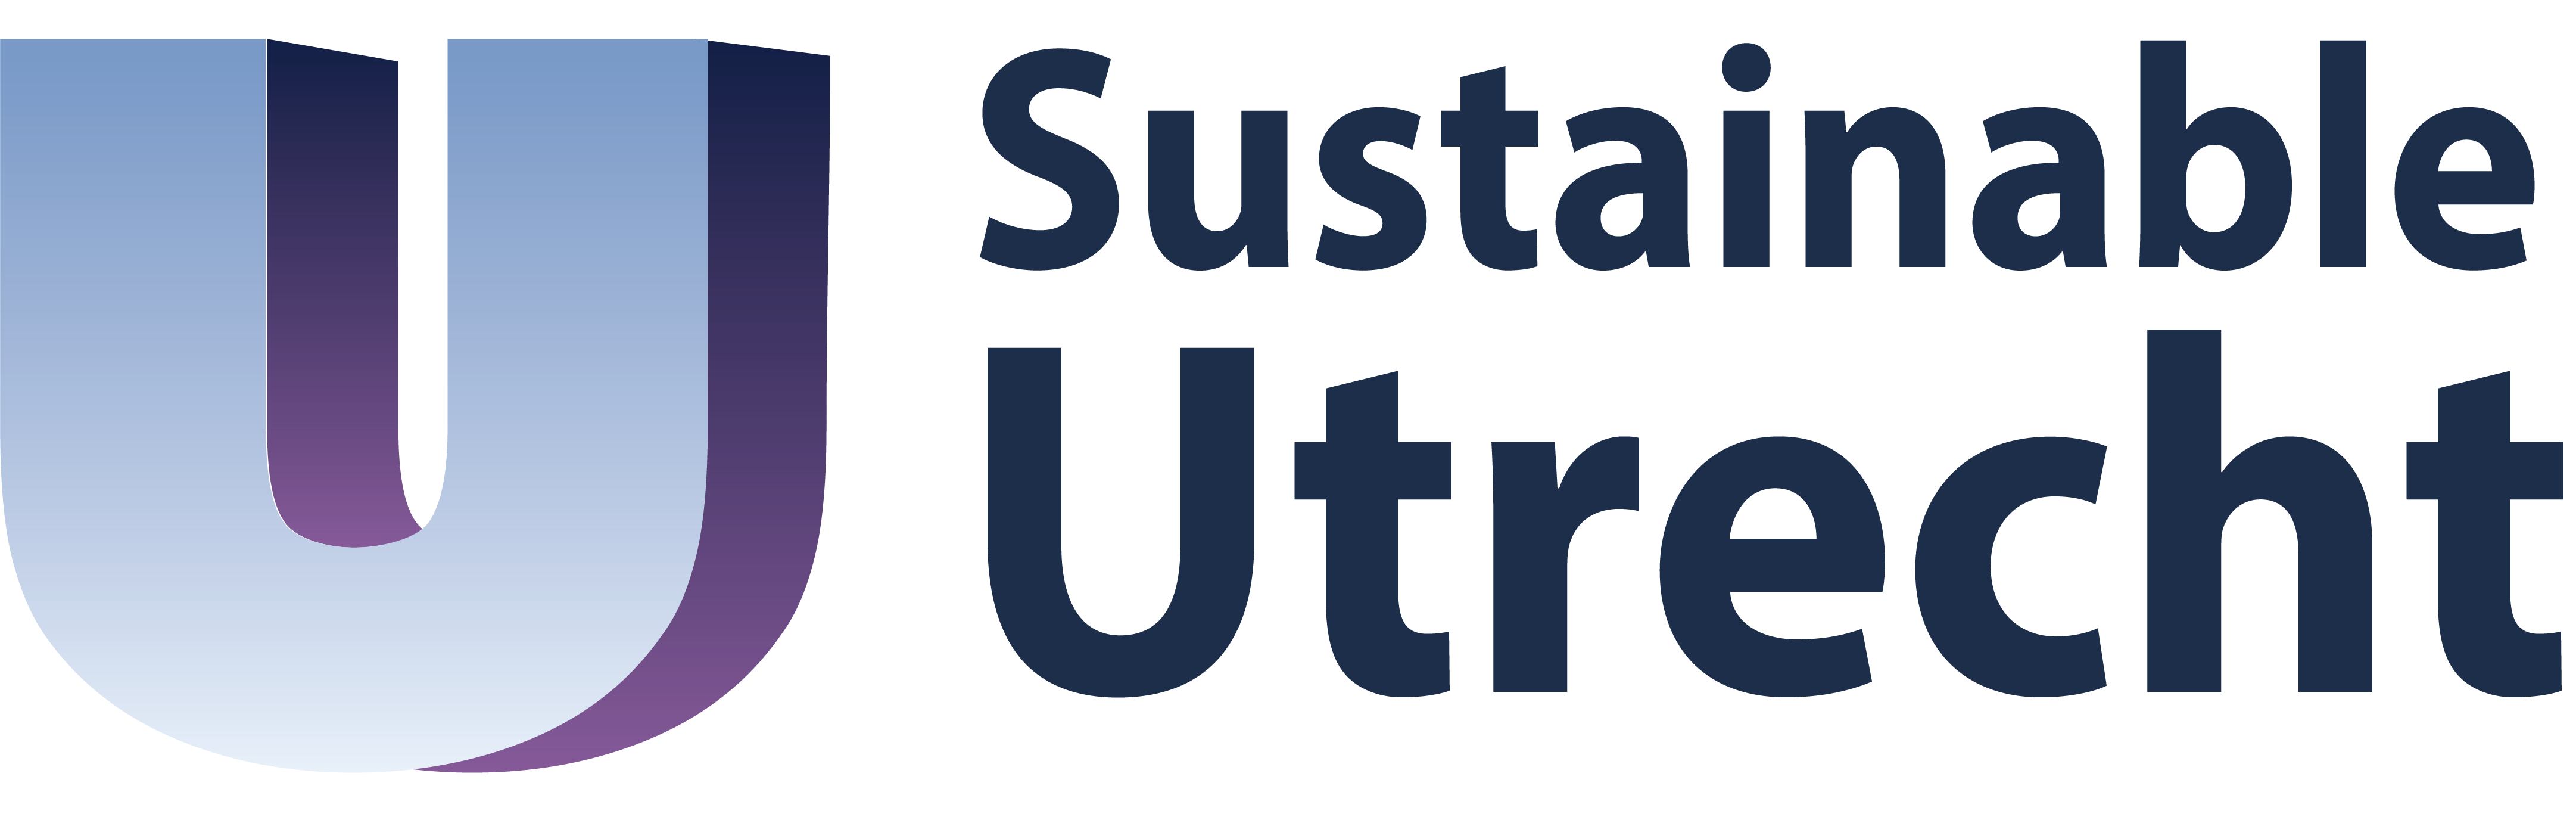 Sustainable-Utrecht-Logo-Redesign